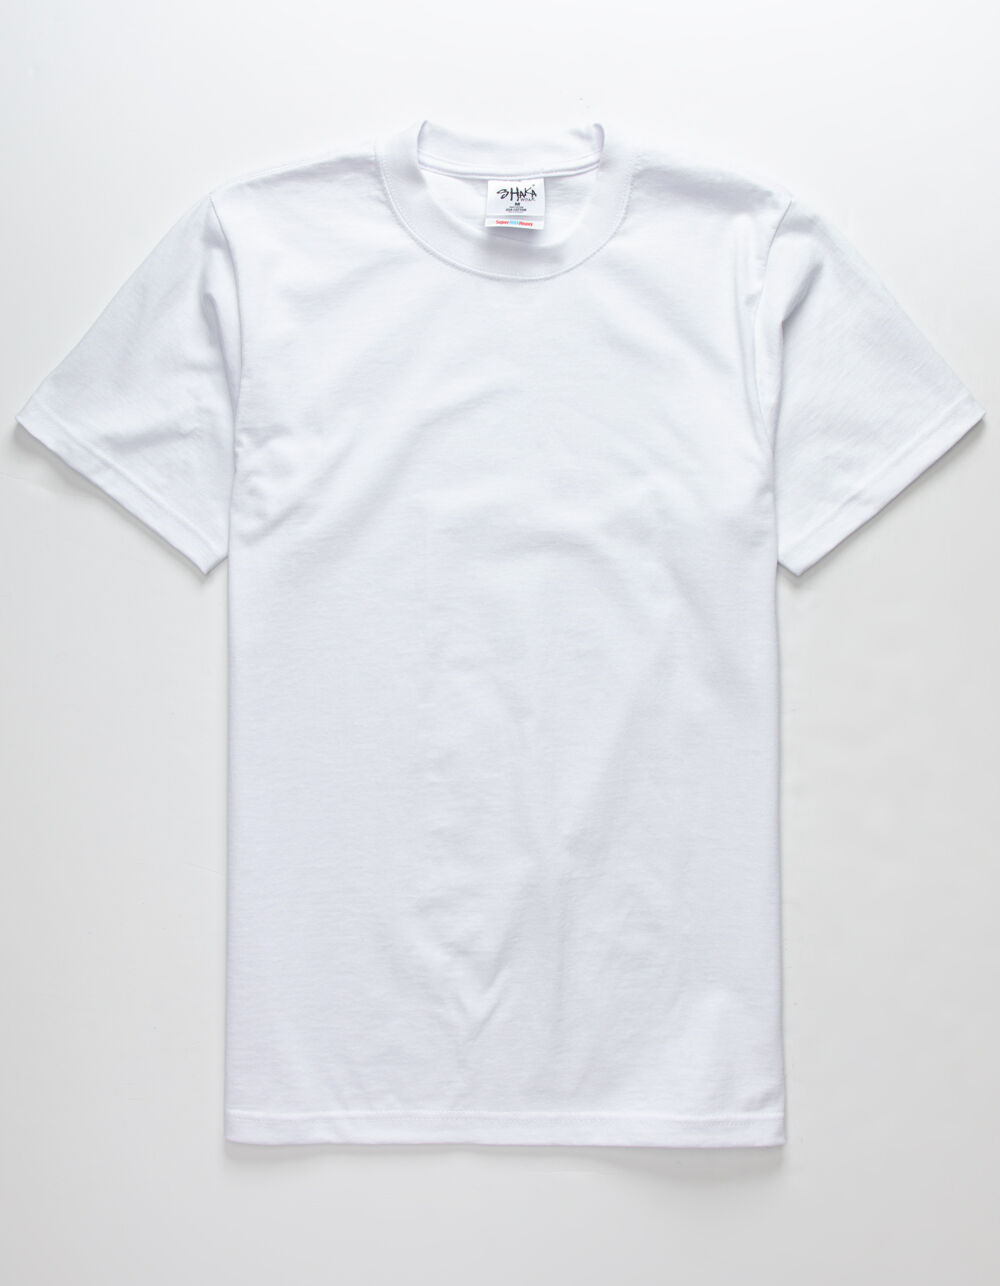 Shaka Wear Designer Garment Dye White Heavyweight T-Shirt